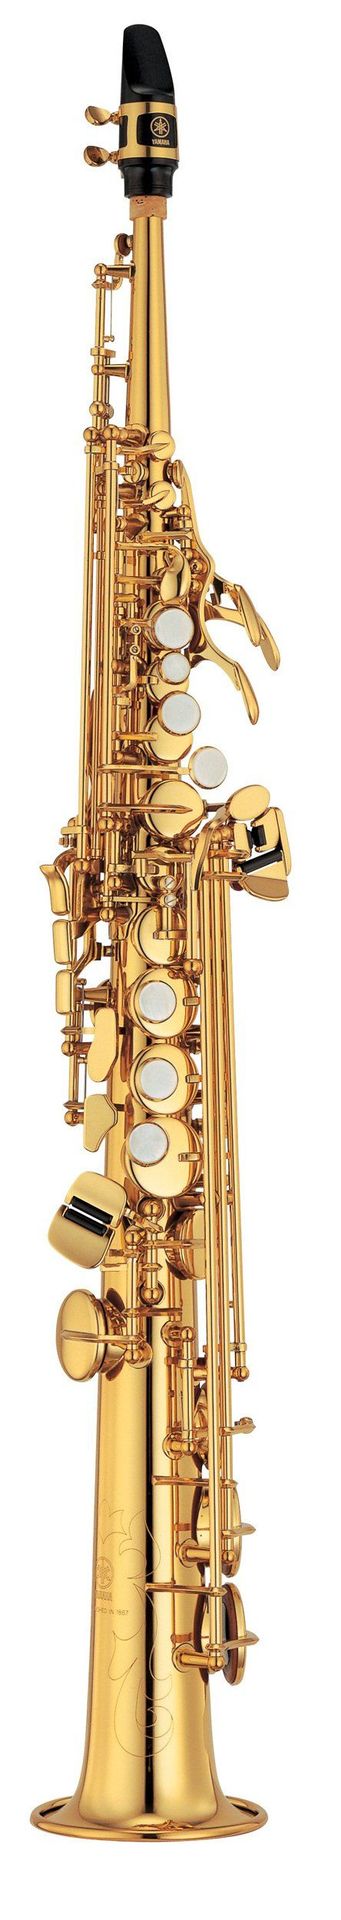 Yamaha YSS-475-II B-Sopransaxophon, incl. Etui u. Zubehör 